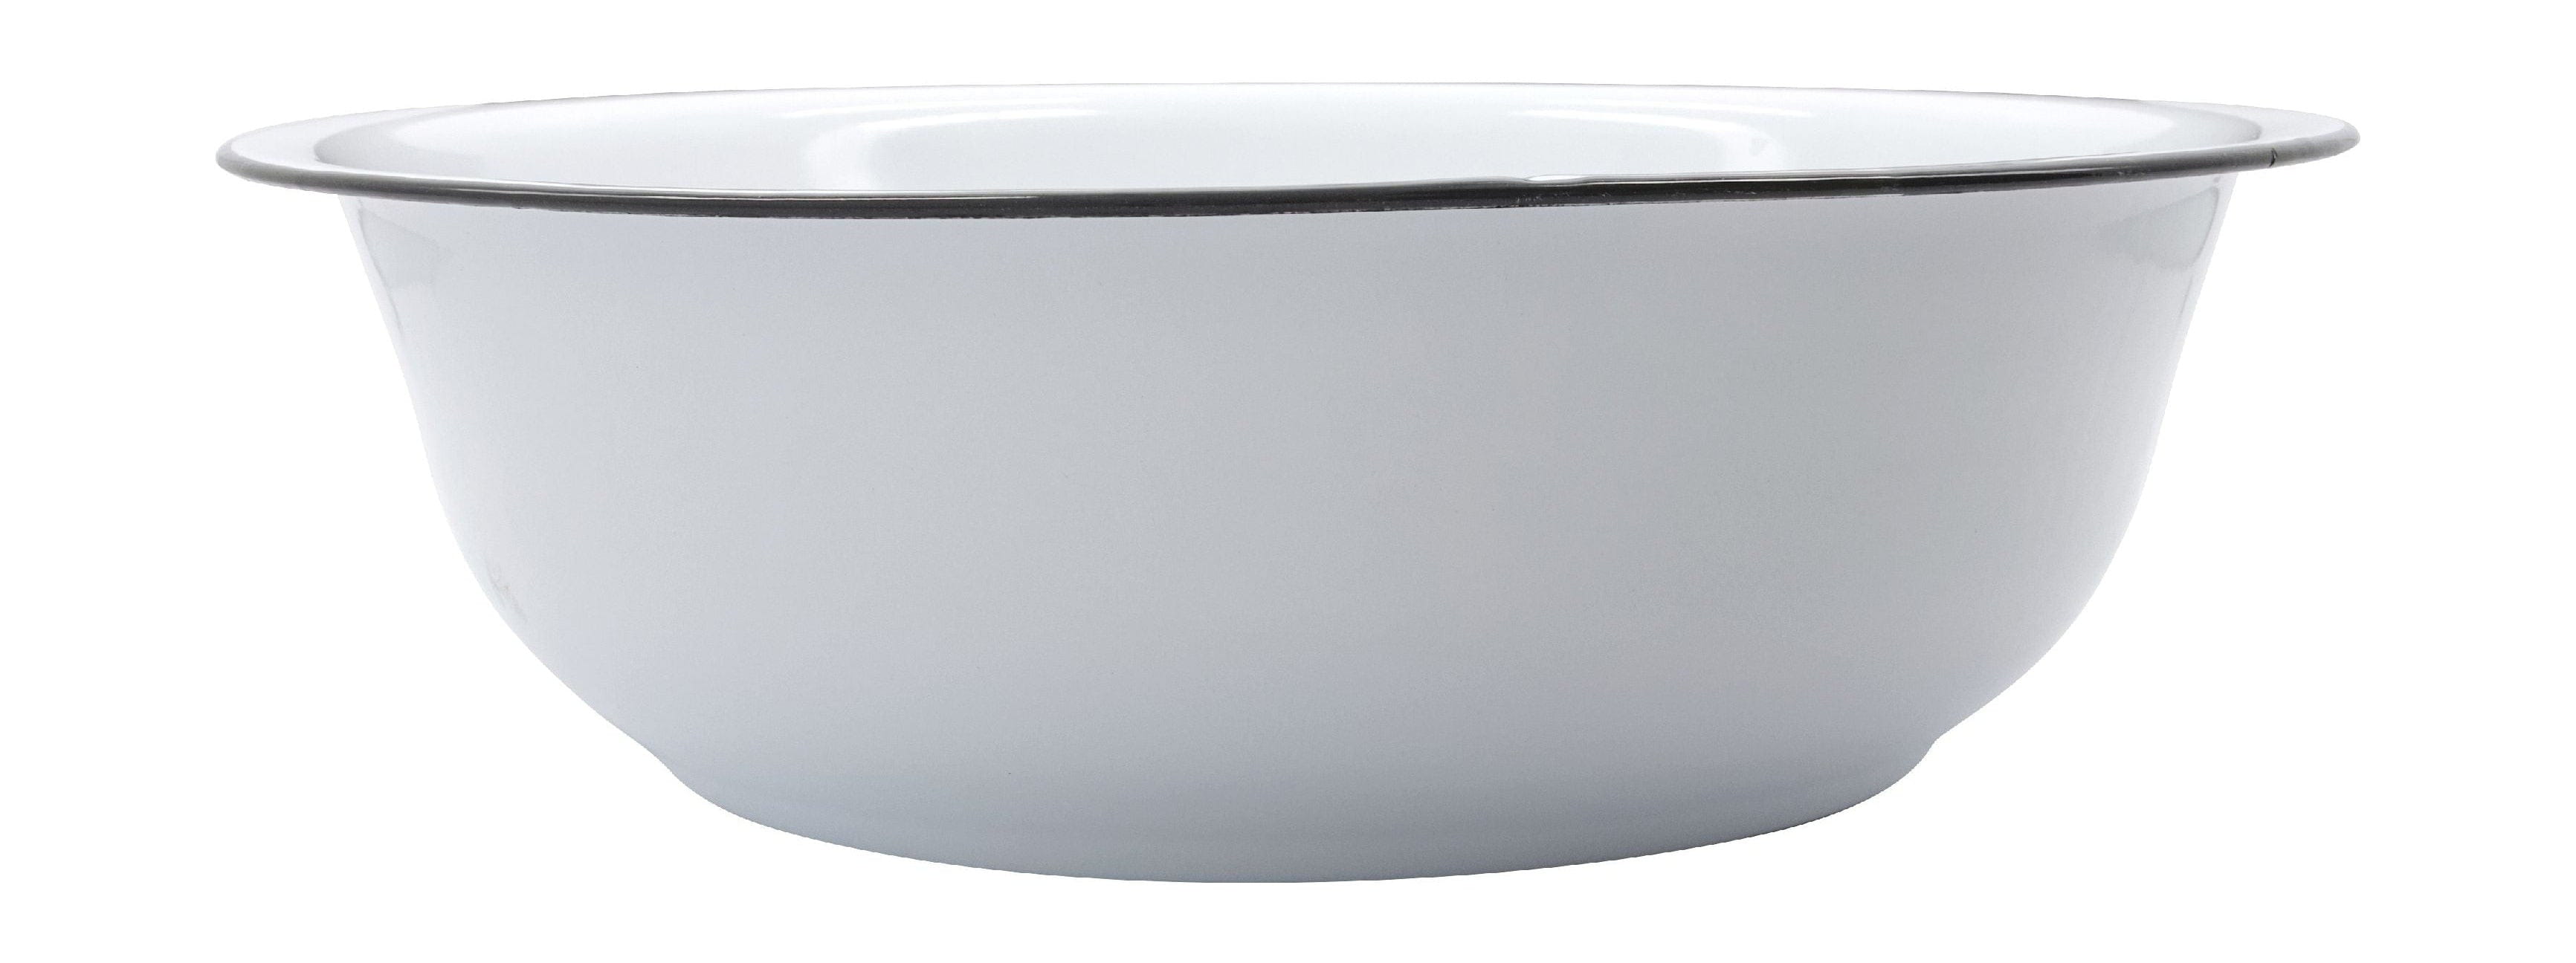 Meraki Wash Bowl Large, White